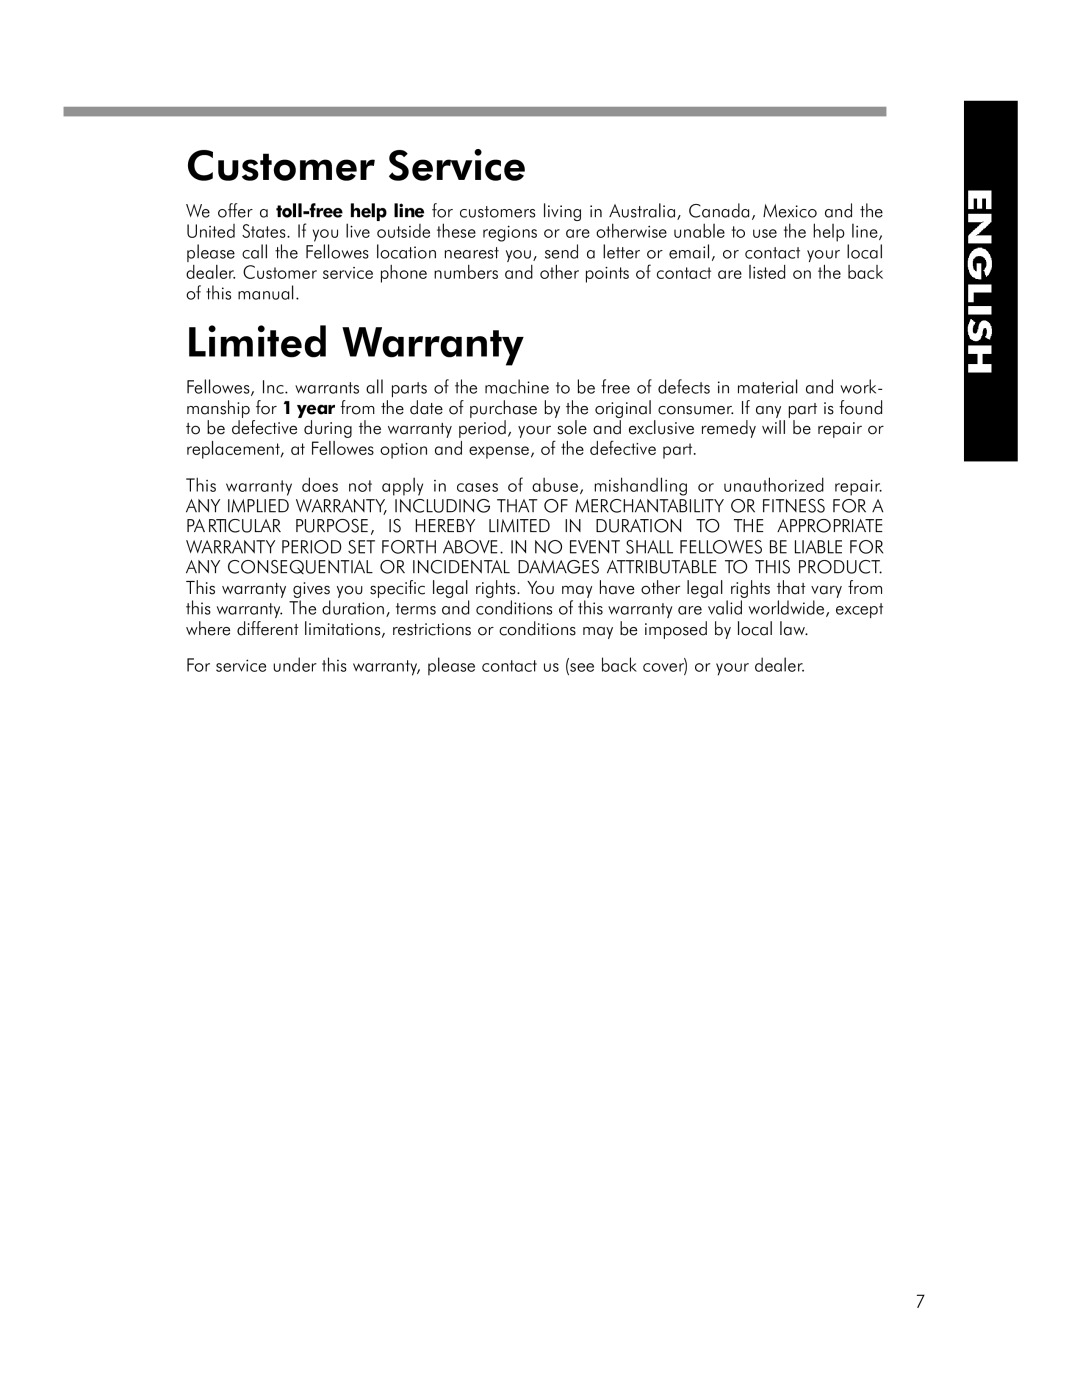 Fellowes WB 150 manual Customer Service, Limited Warranty 